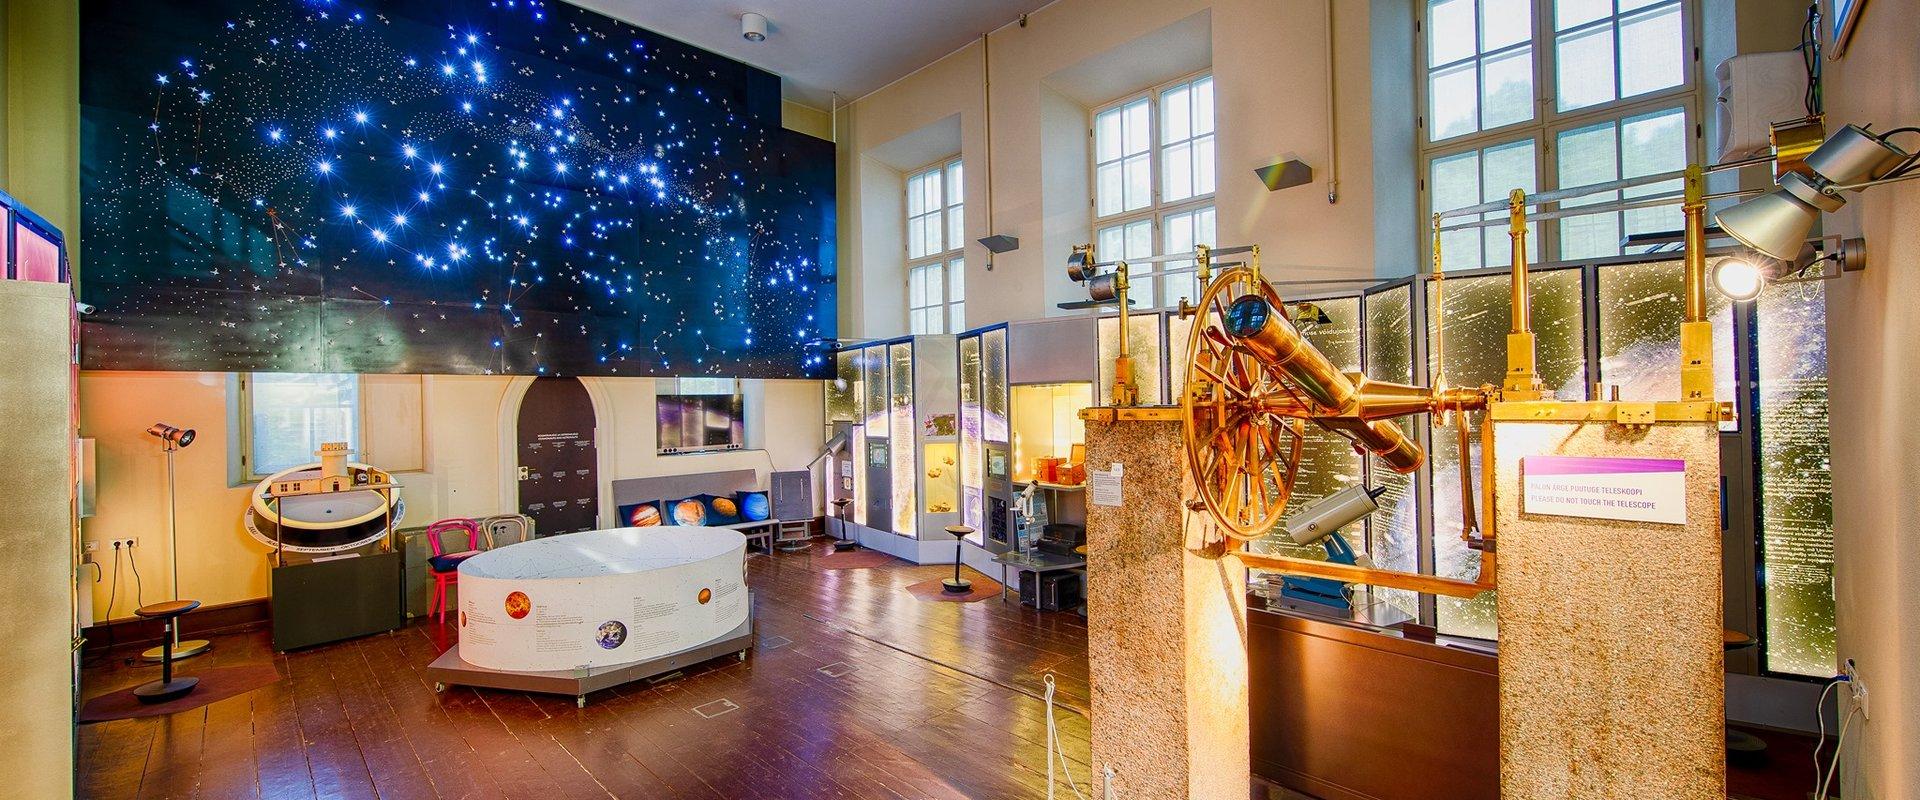 Tartu Old Observatory, permanent exhibition